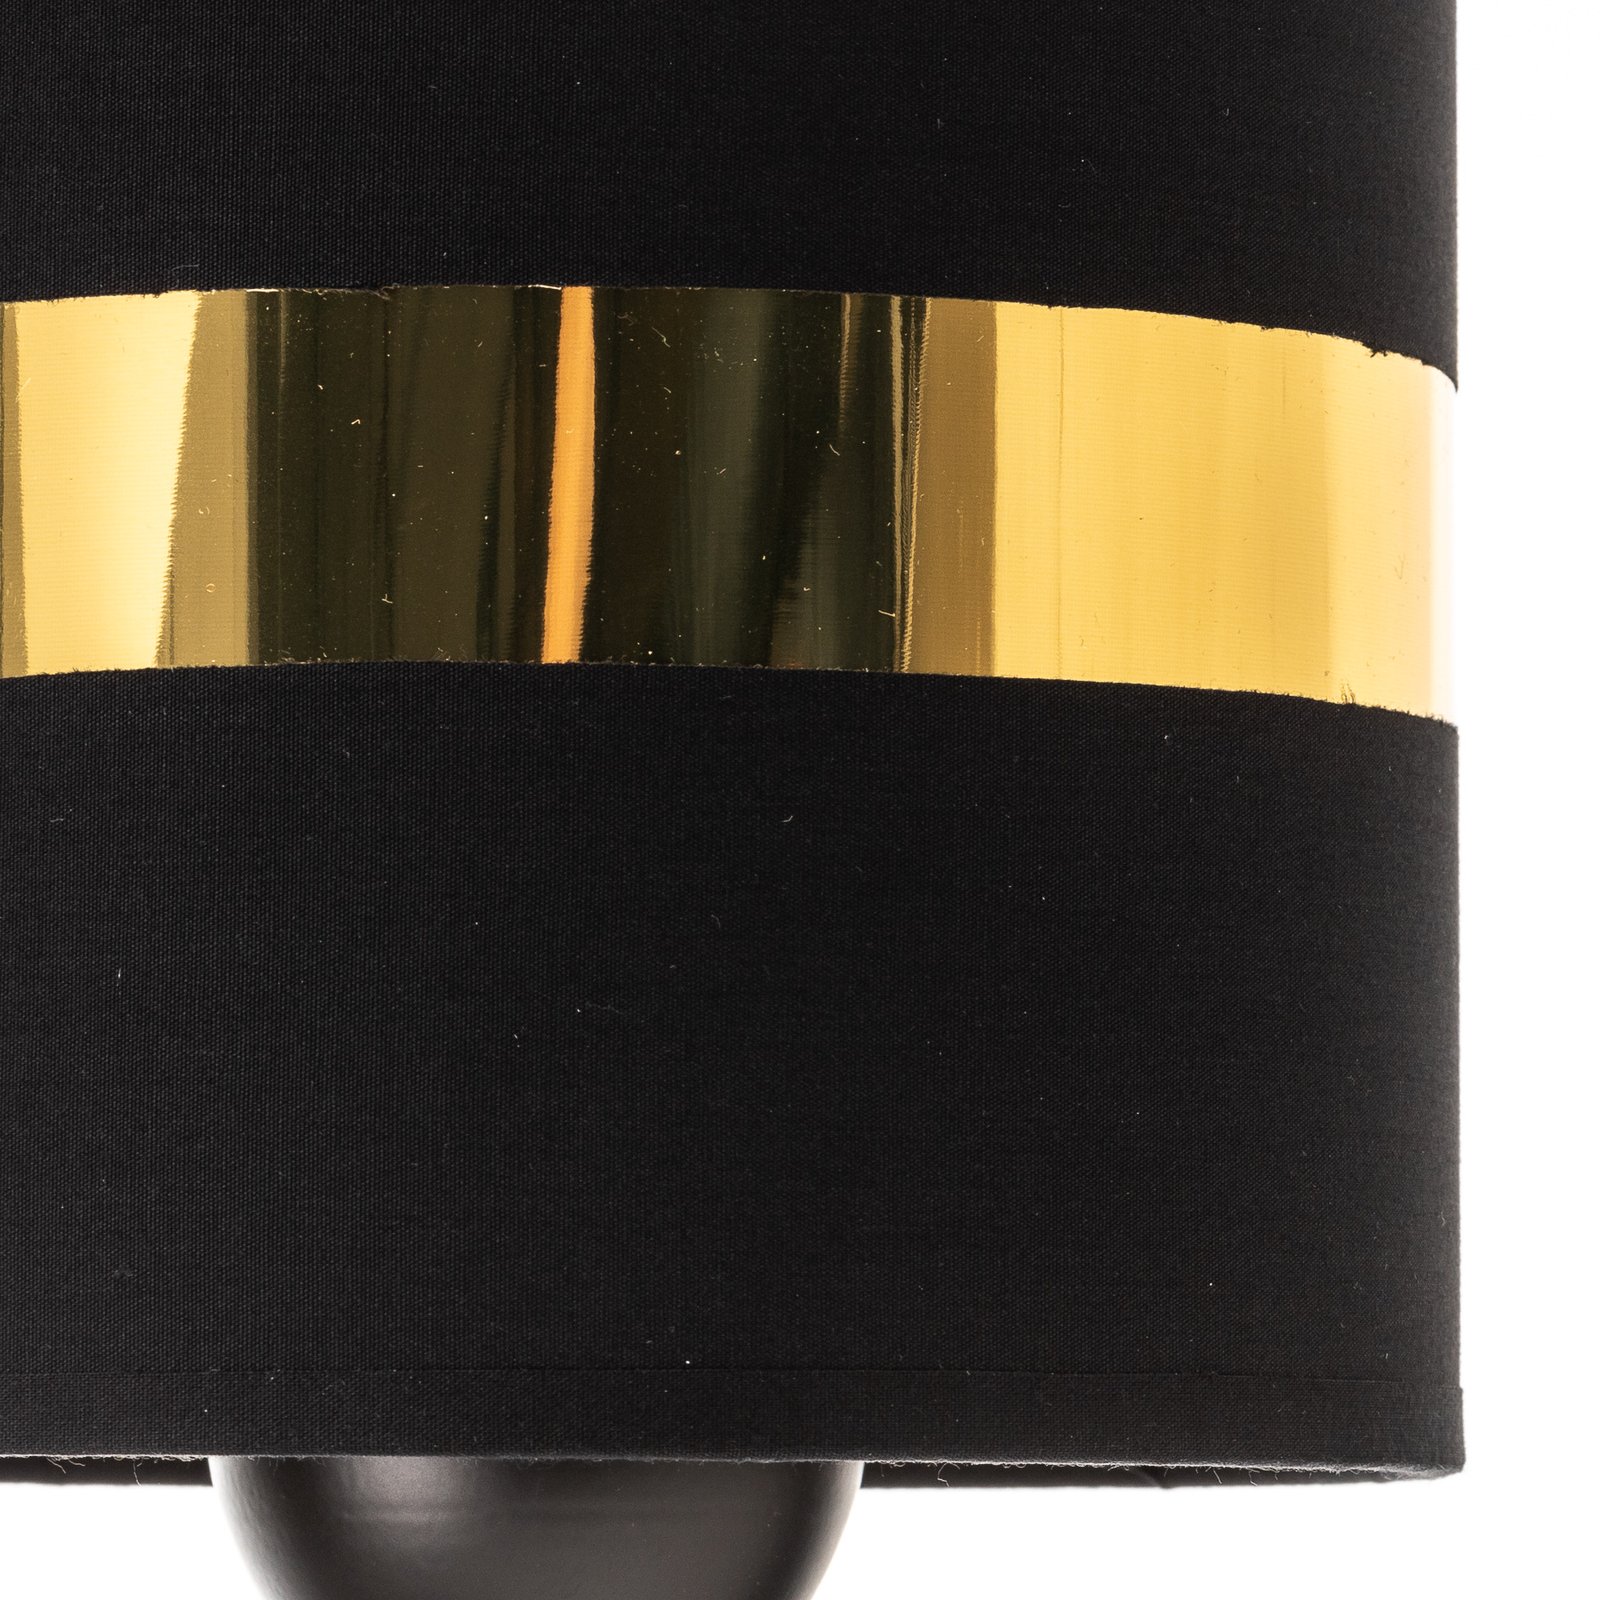 Palmira wall light, fabric lampshade, black/gold